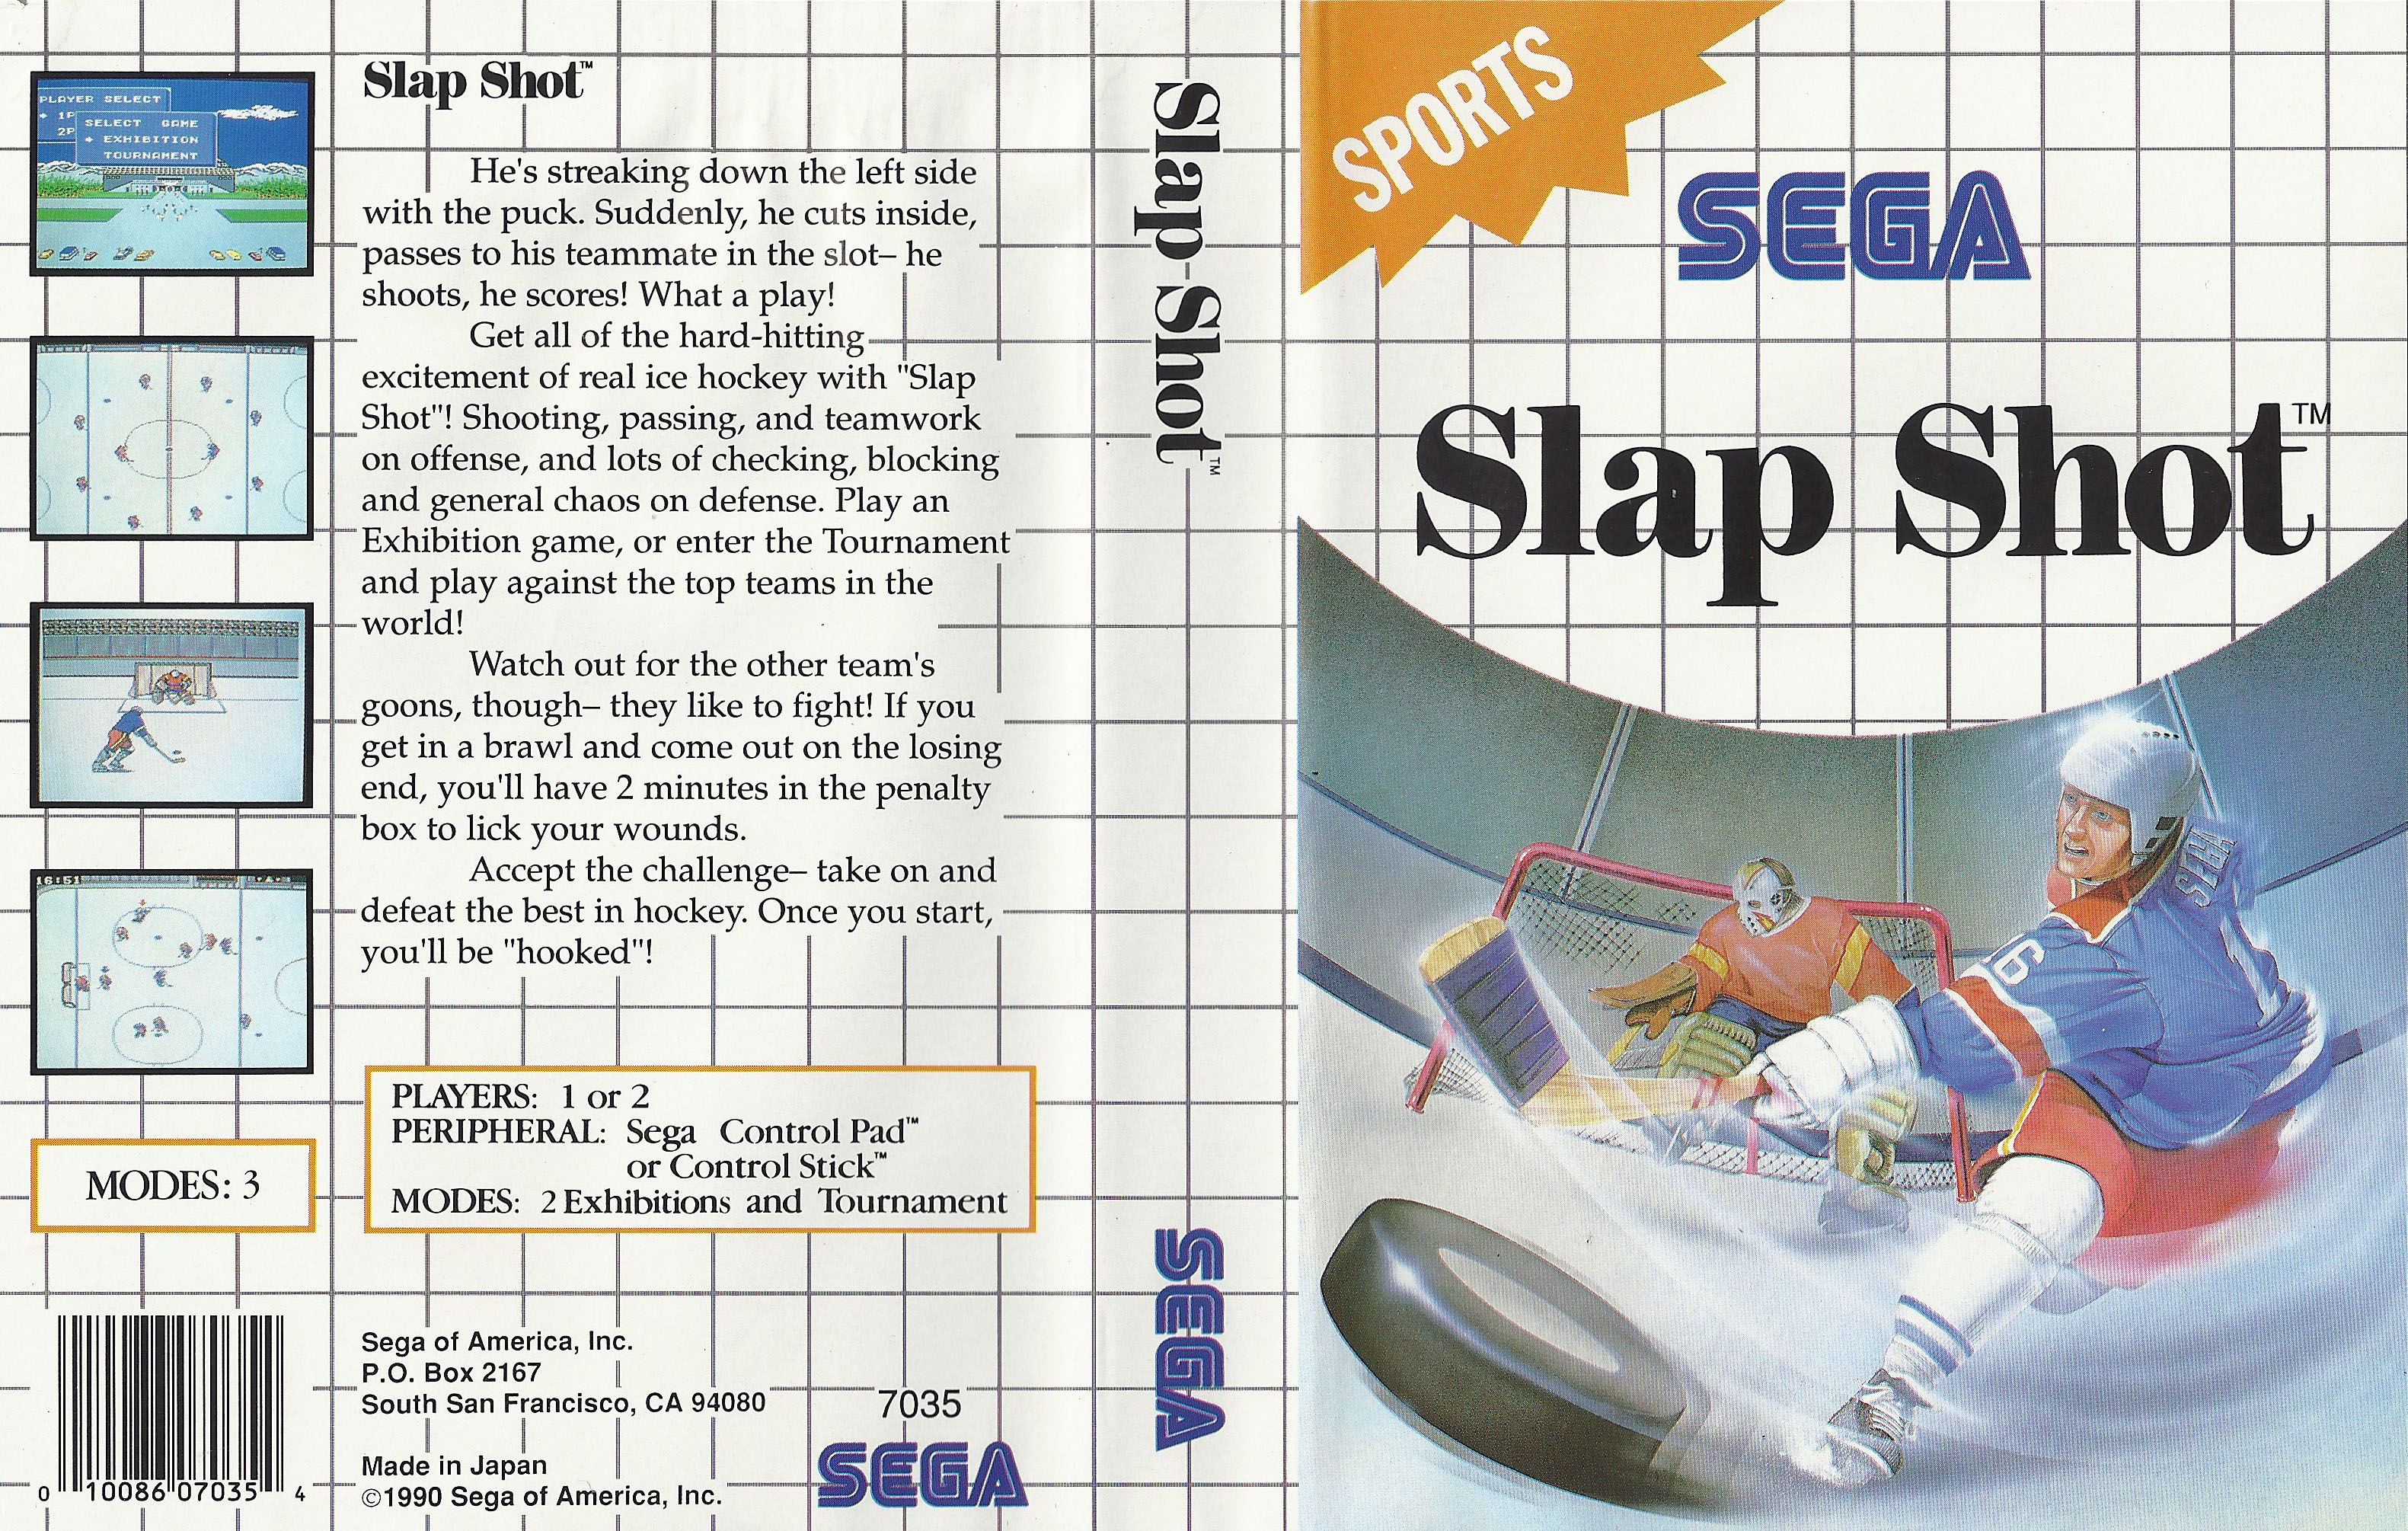 Slap shot video game ark vr